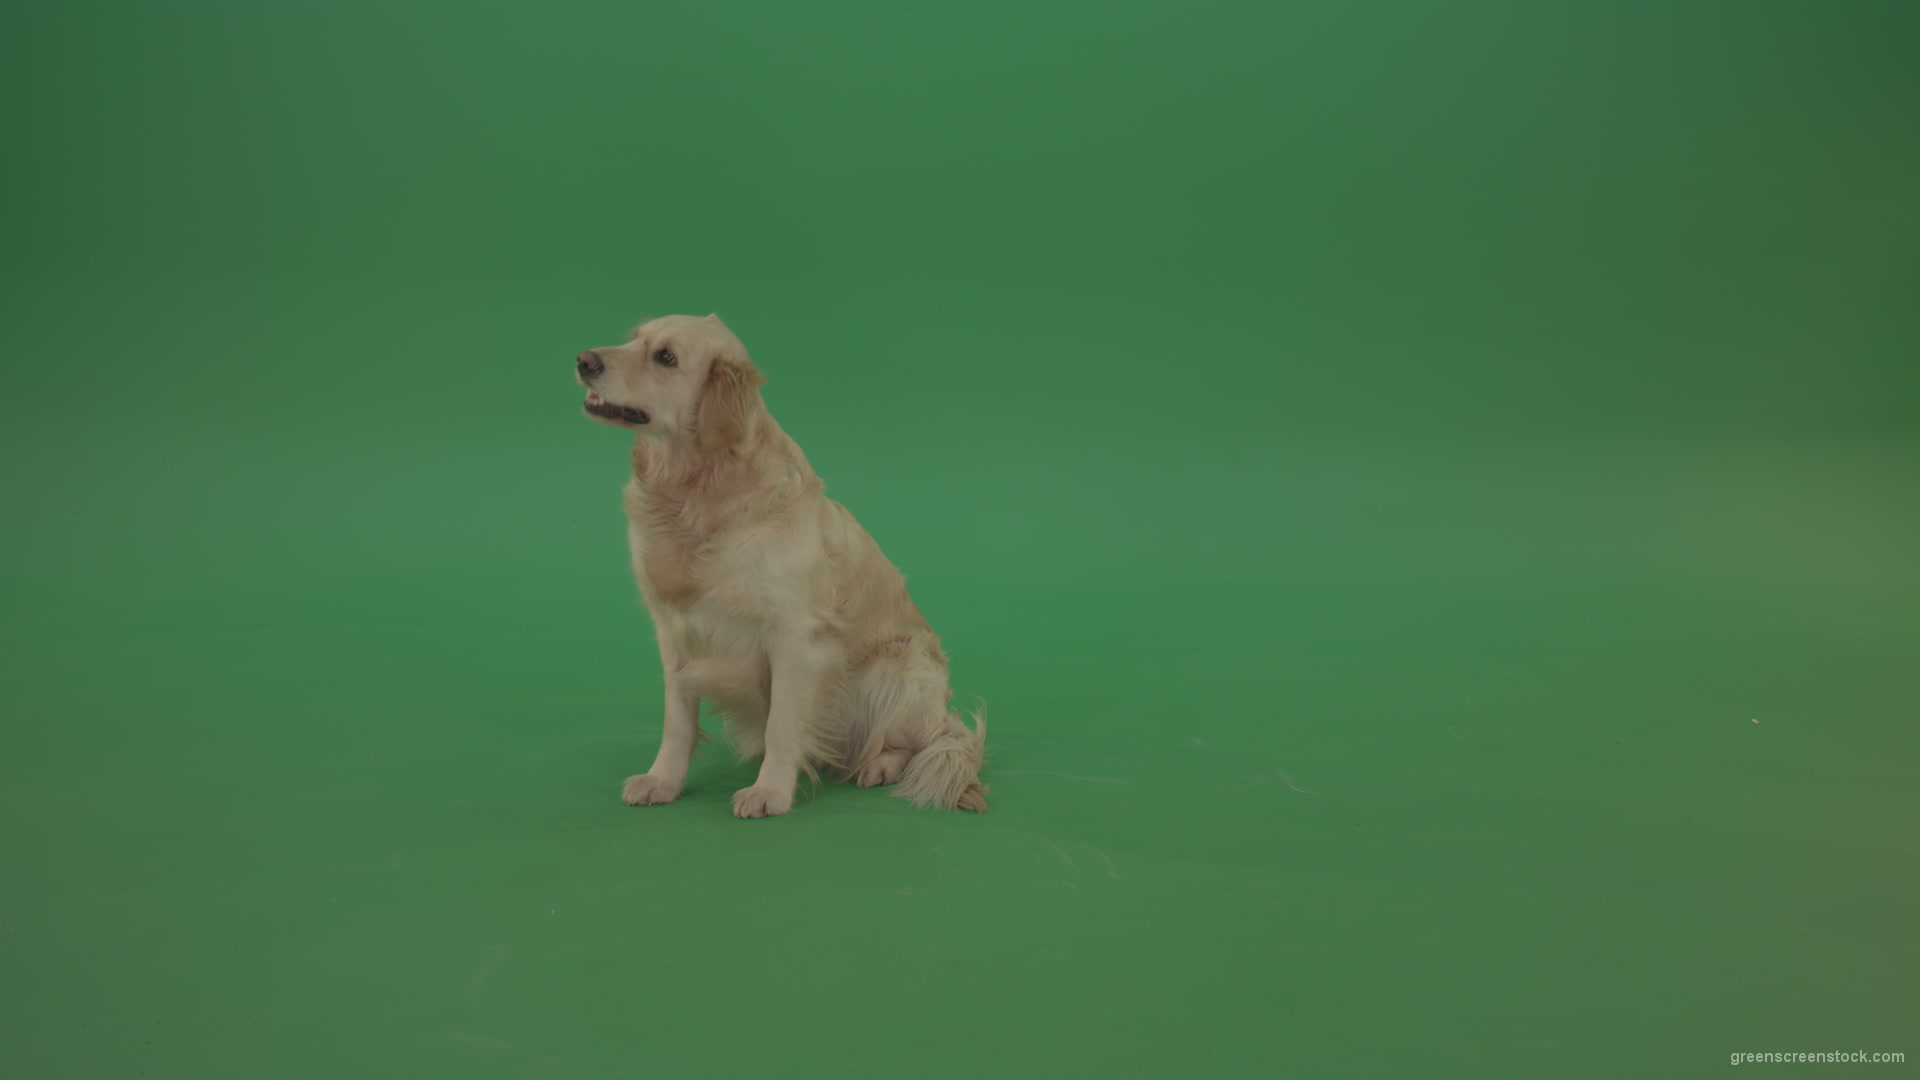 Golden-Retriever-Gun-Dog-sittin-and-eat-isolated-on-green-screen-4K-video-footage_007 Green Screen Stock